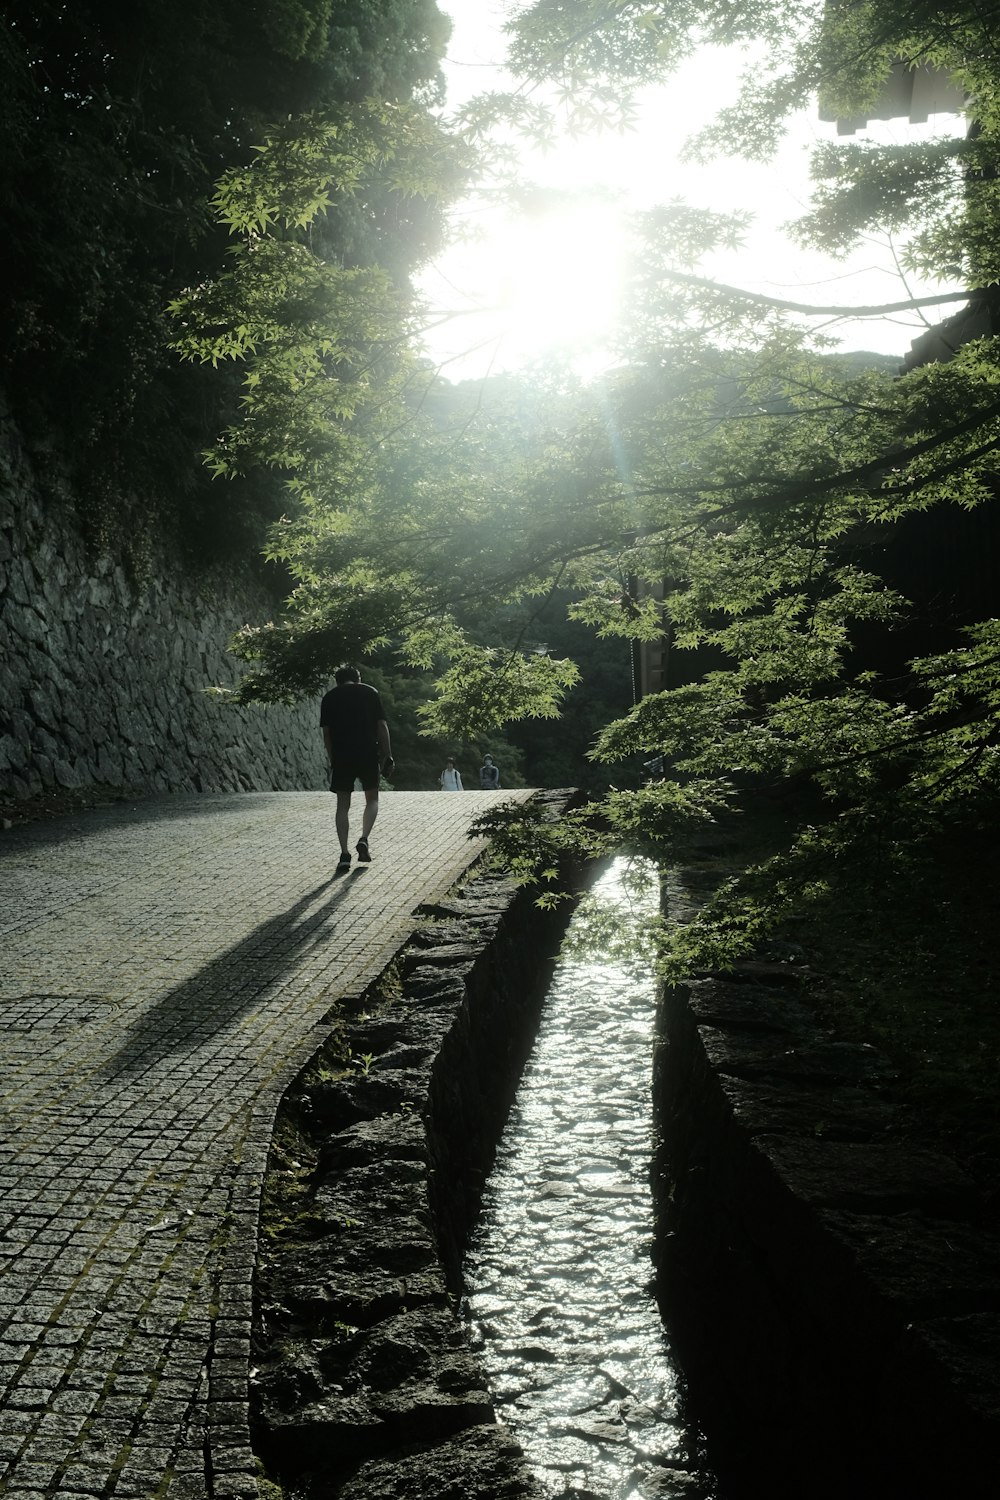 a person walking down a path next to a river